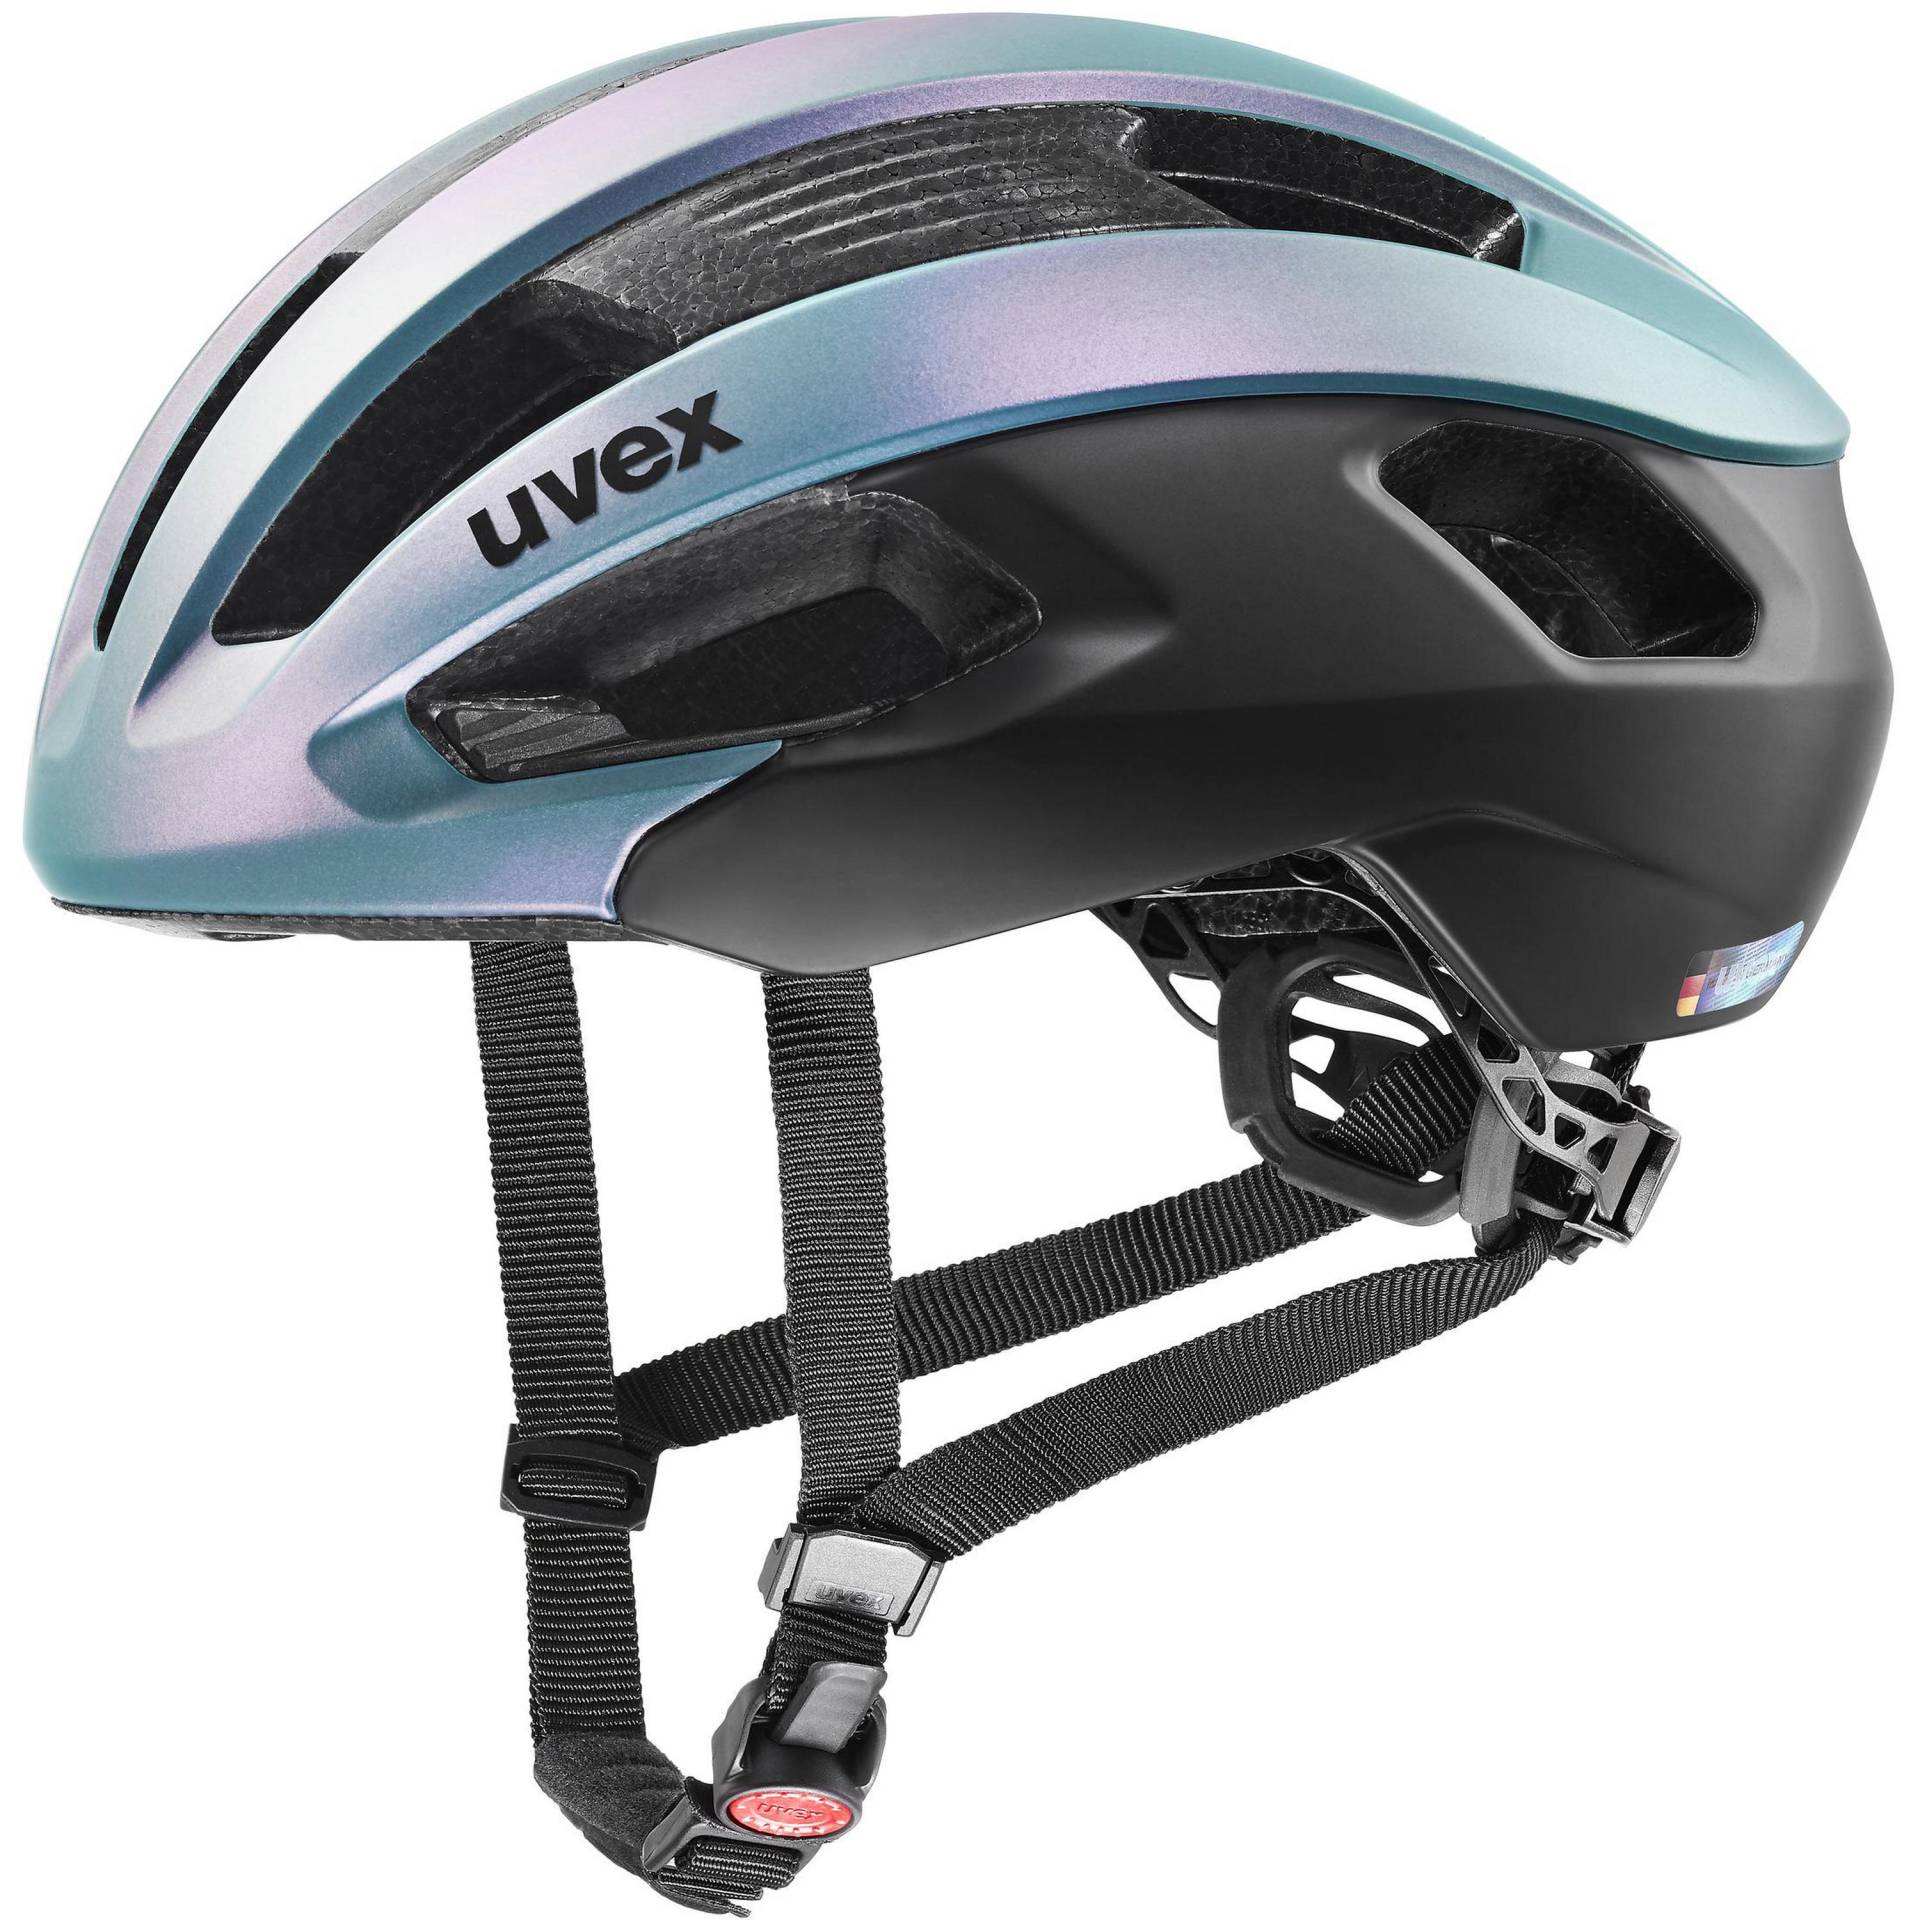 Uvex rise cc Helm von Uvex